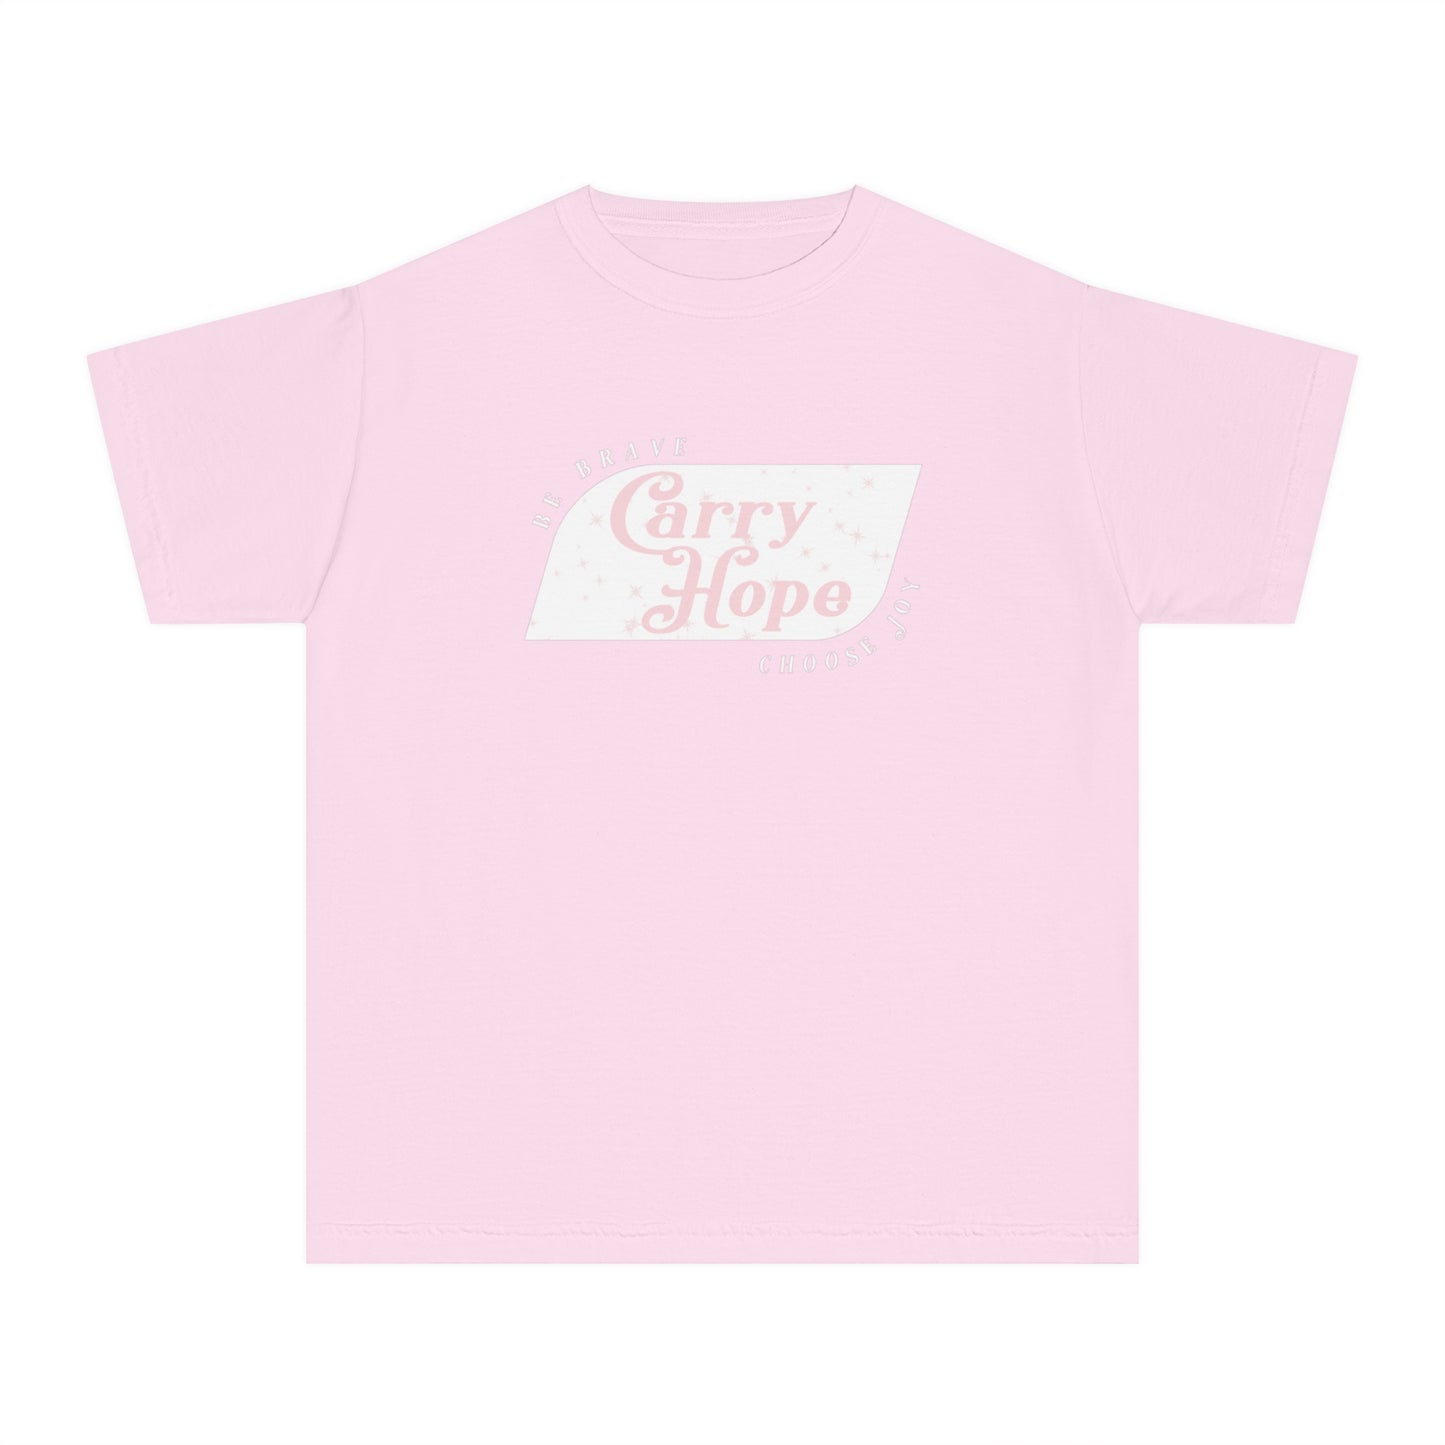 Carry Hope - Kids Shirt